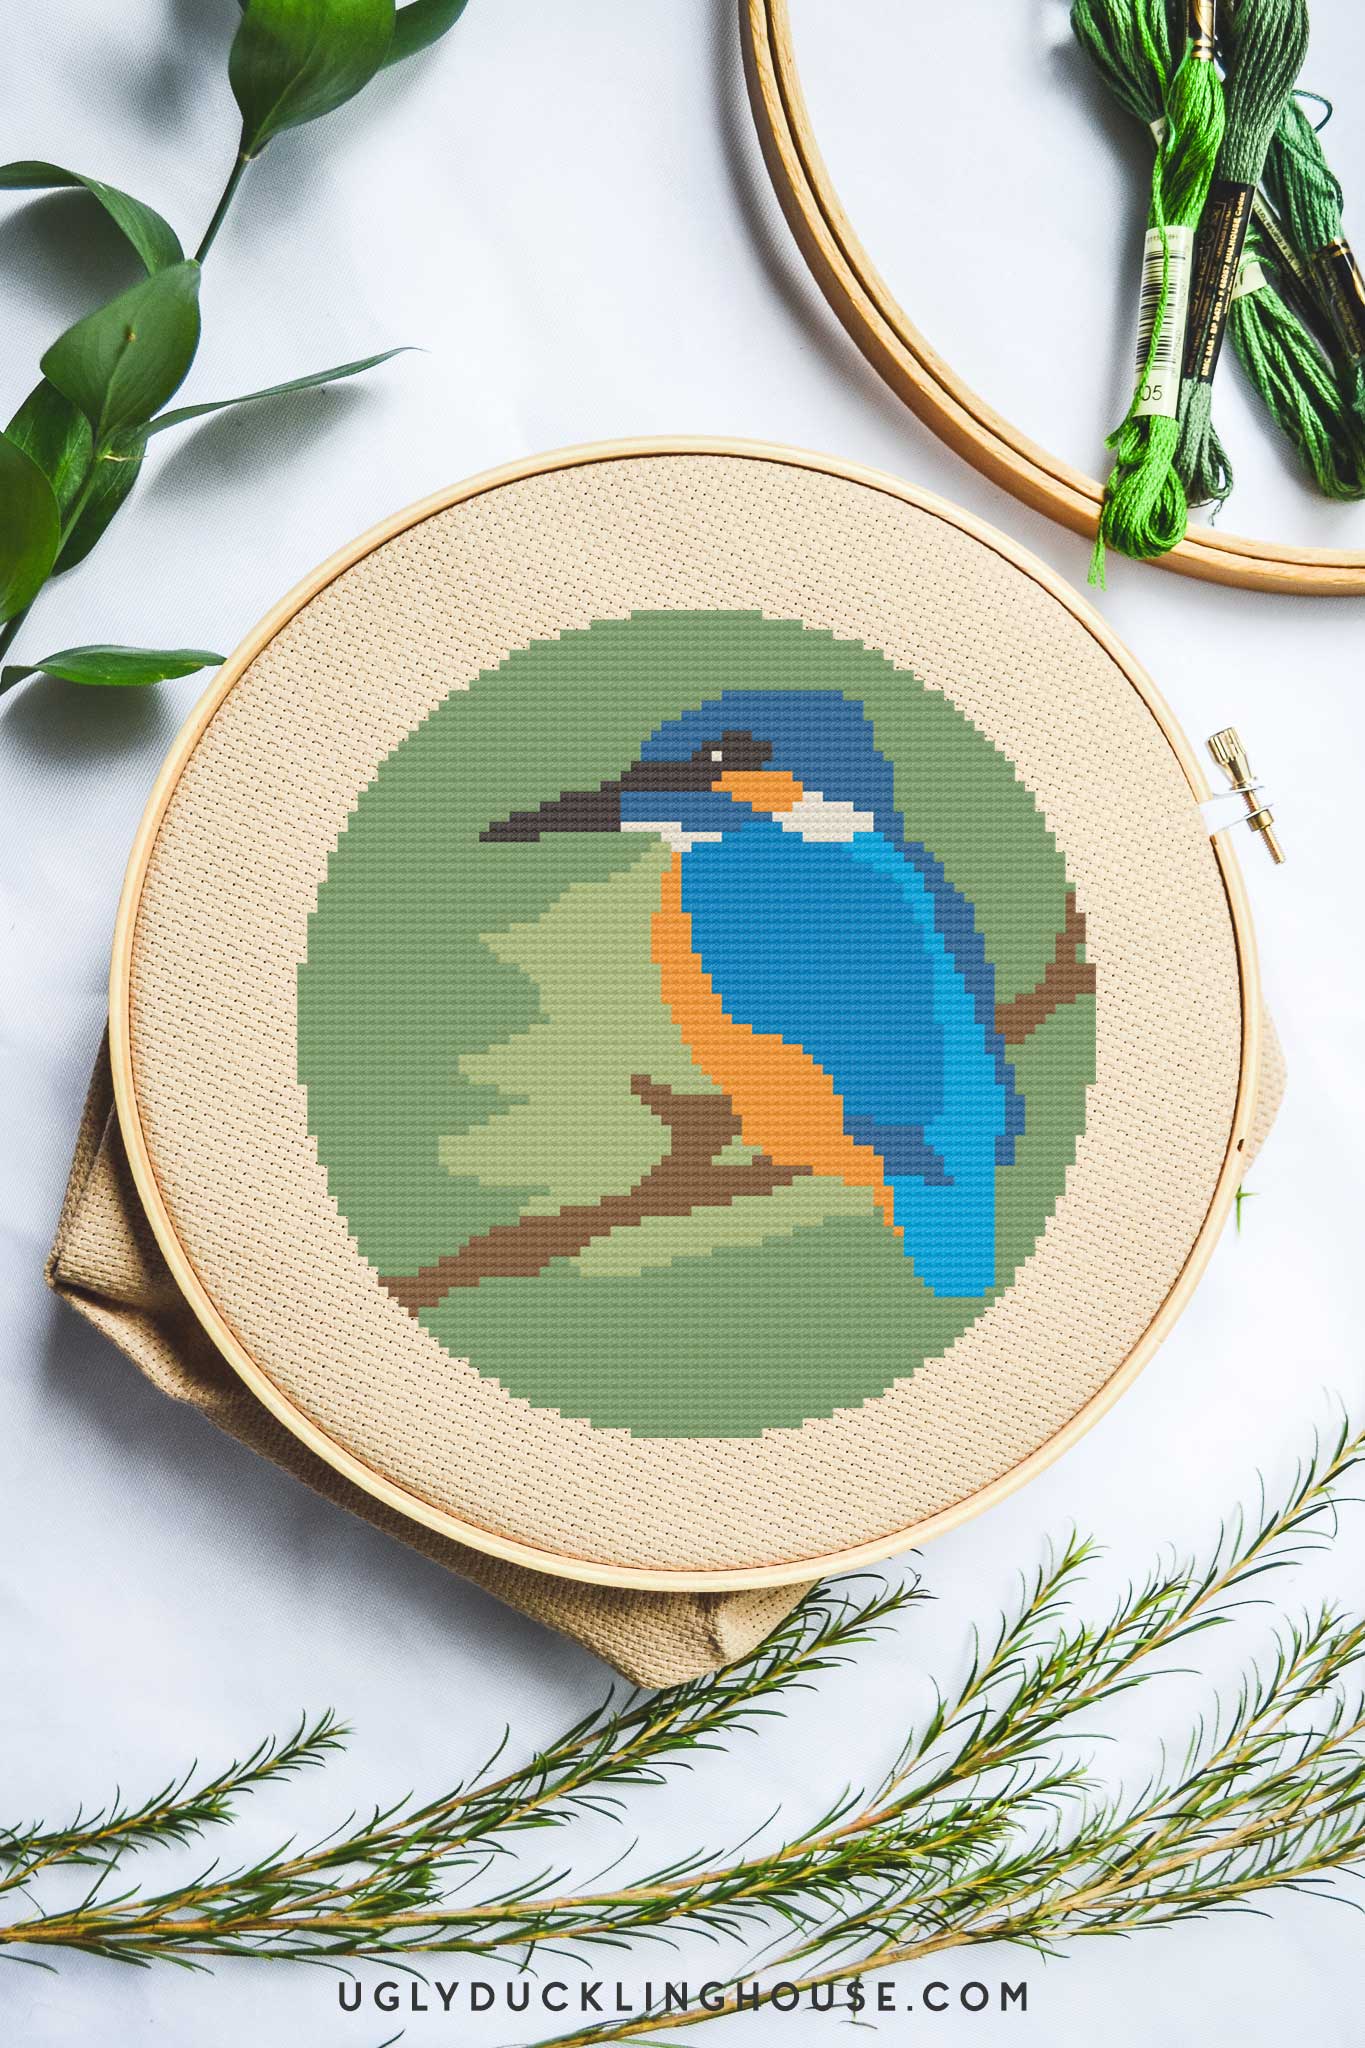 Adorable Kingfisher Bird Cross Stitch Design Crafting Idea